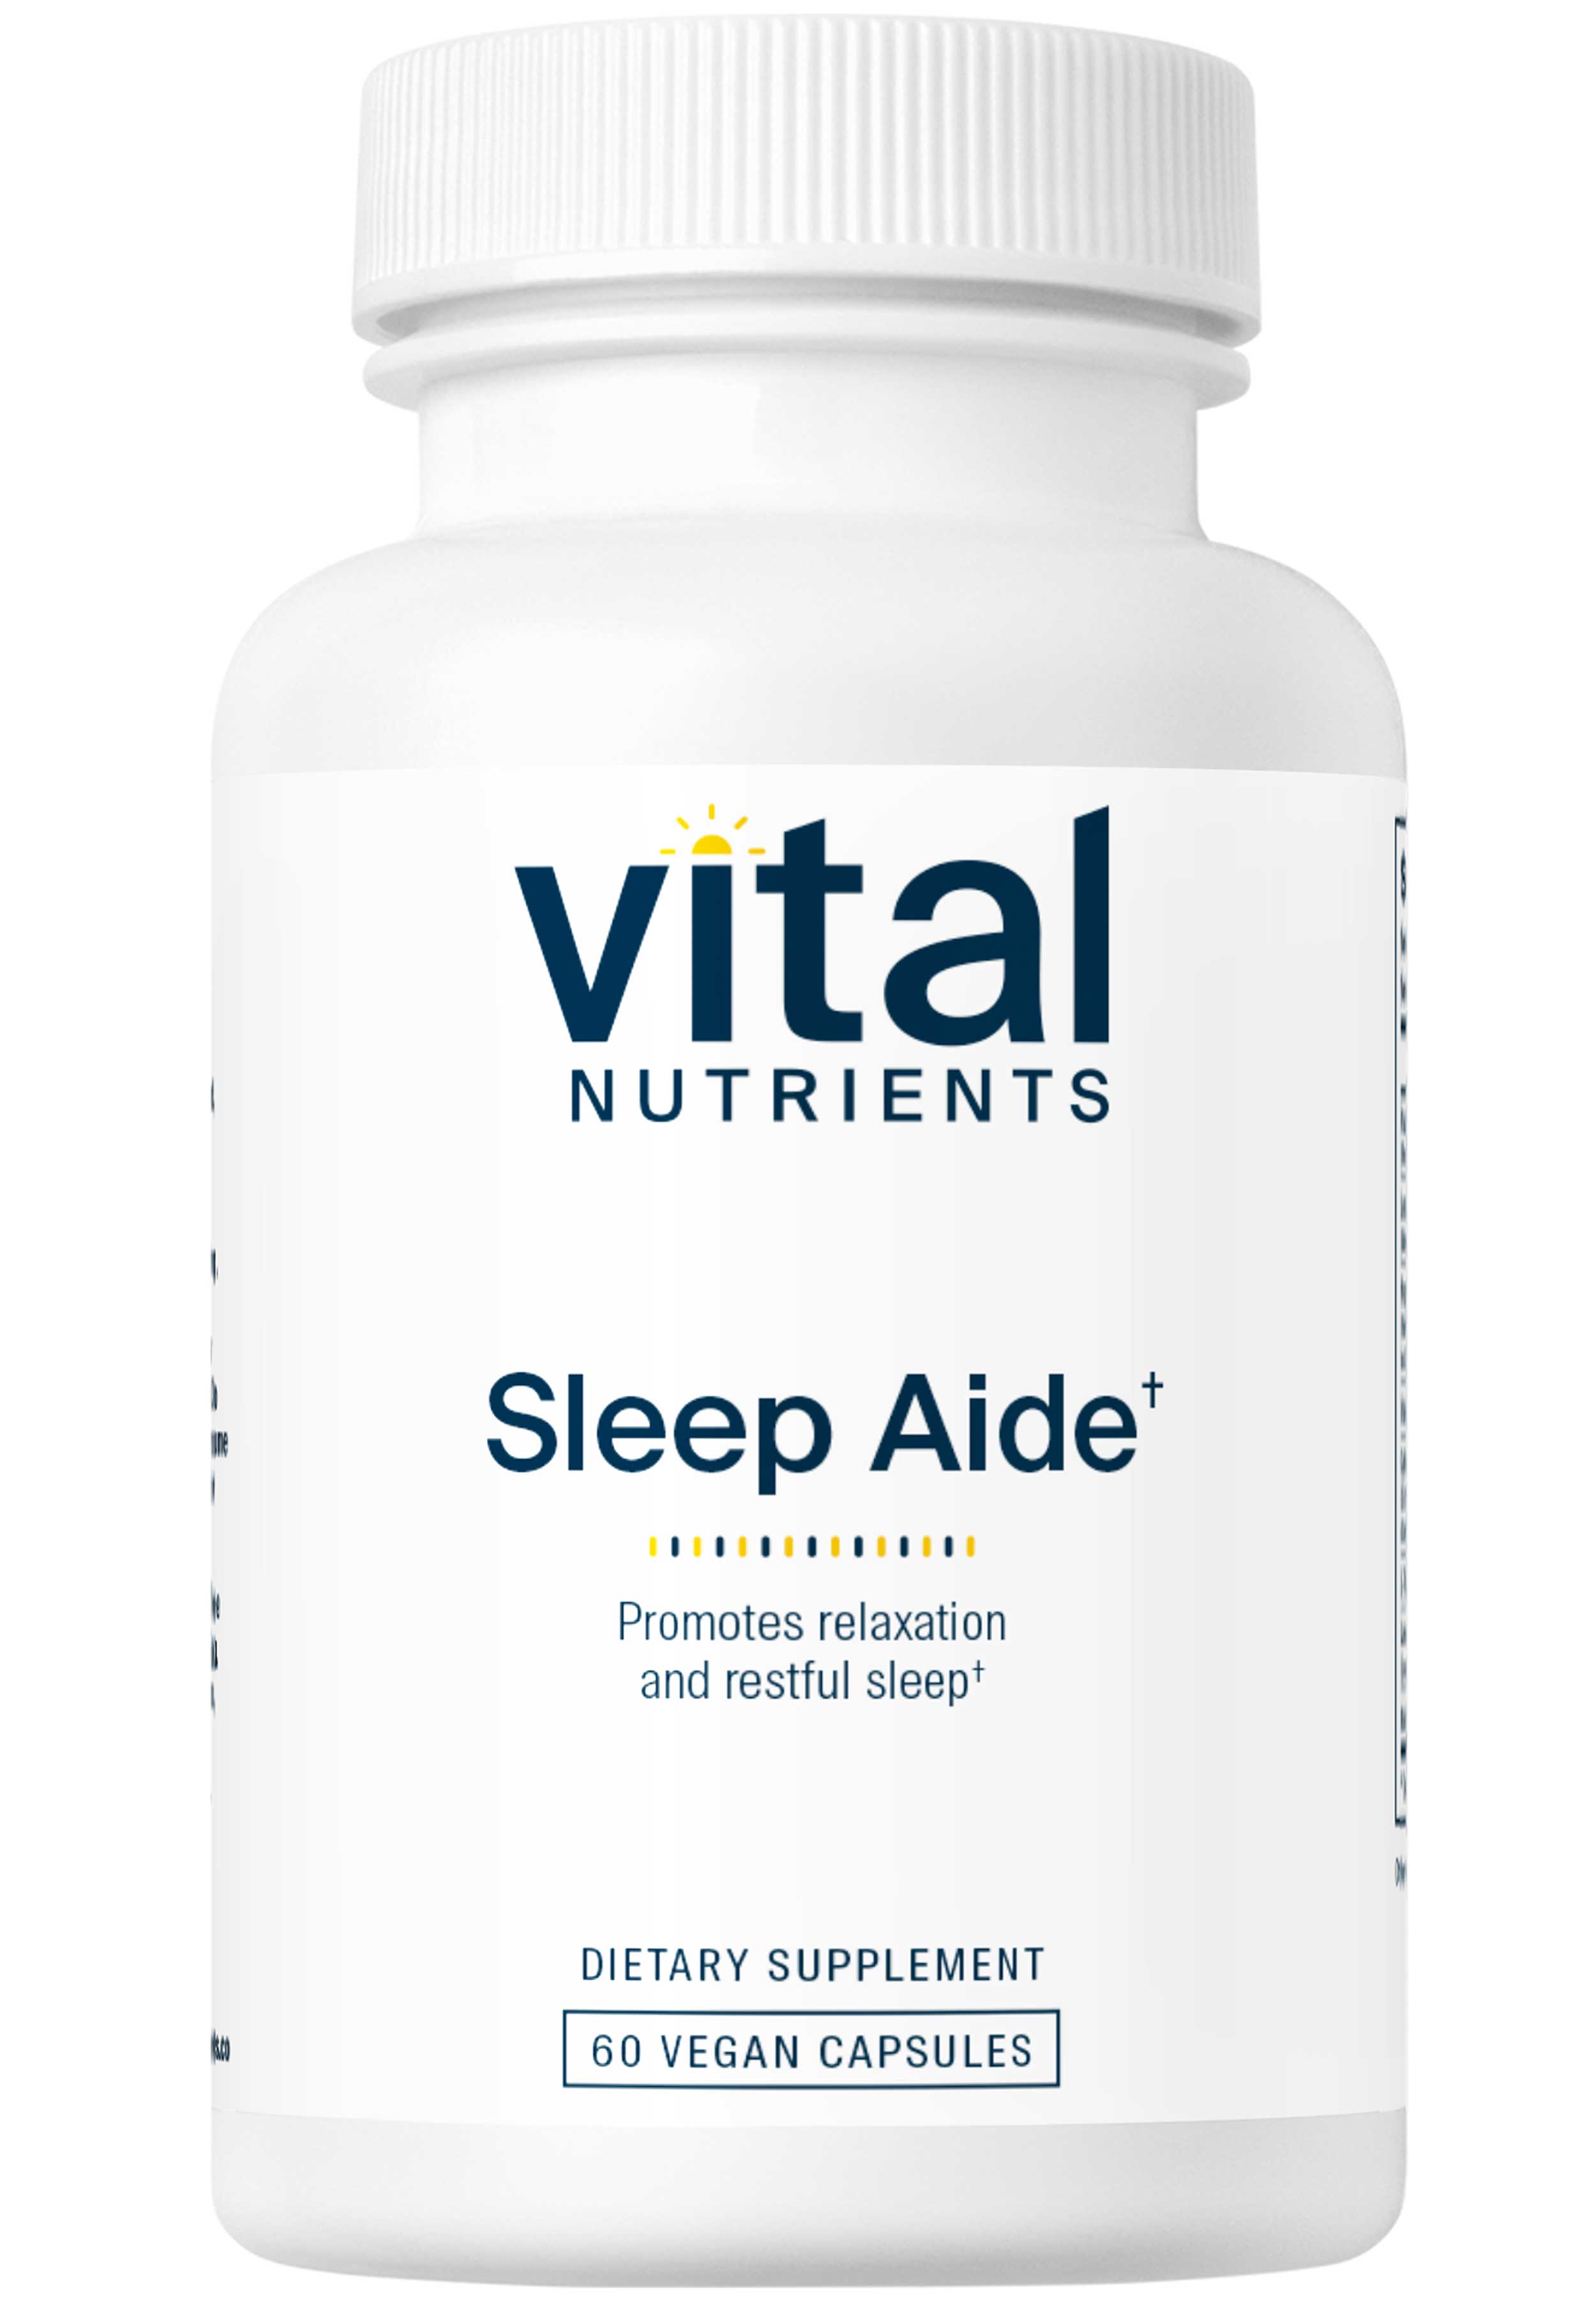 Vital Nutrients Sleep Aide